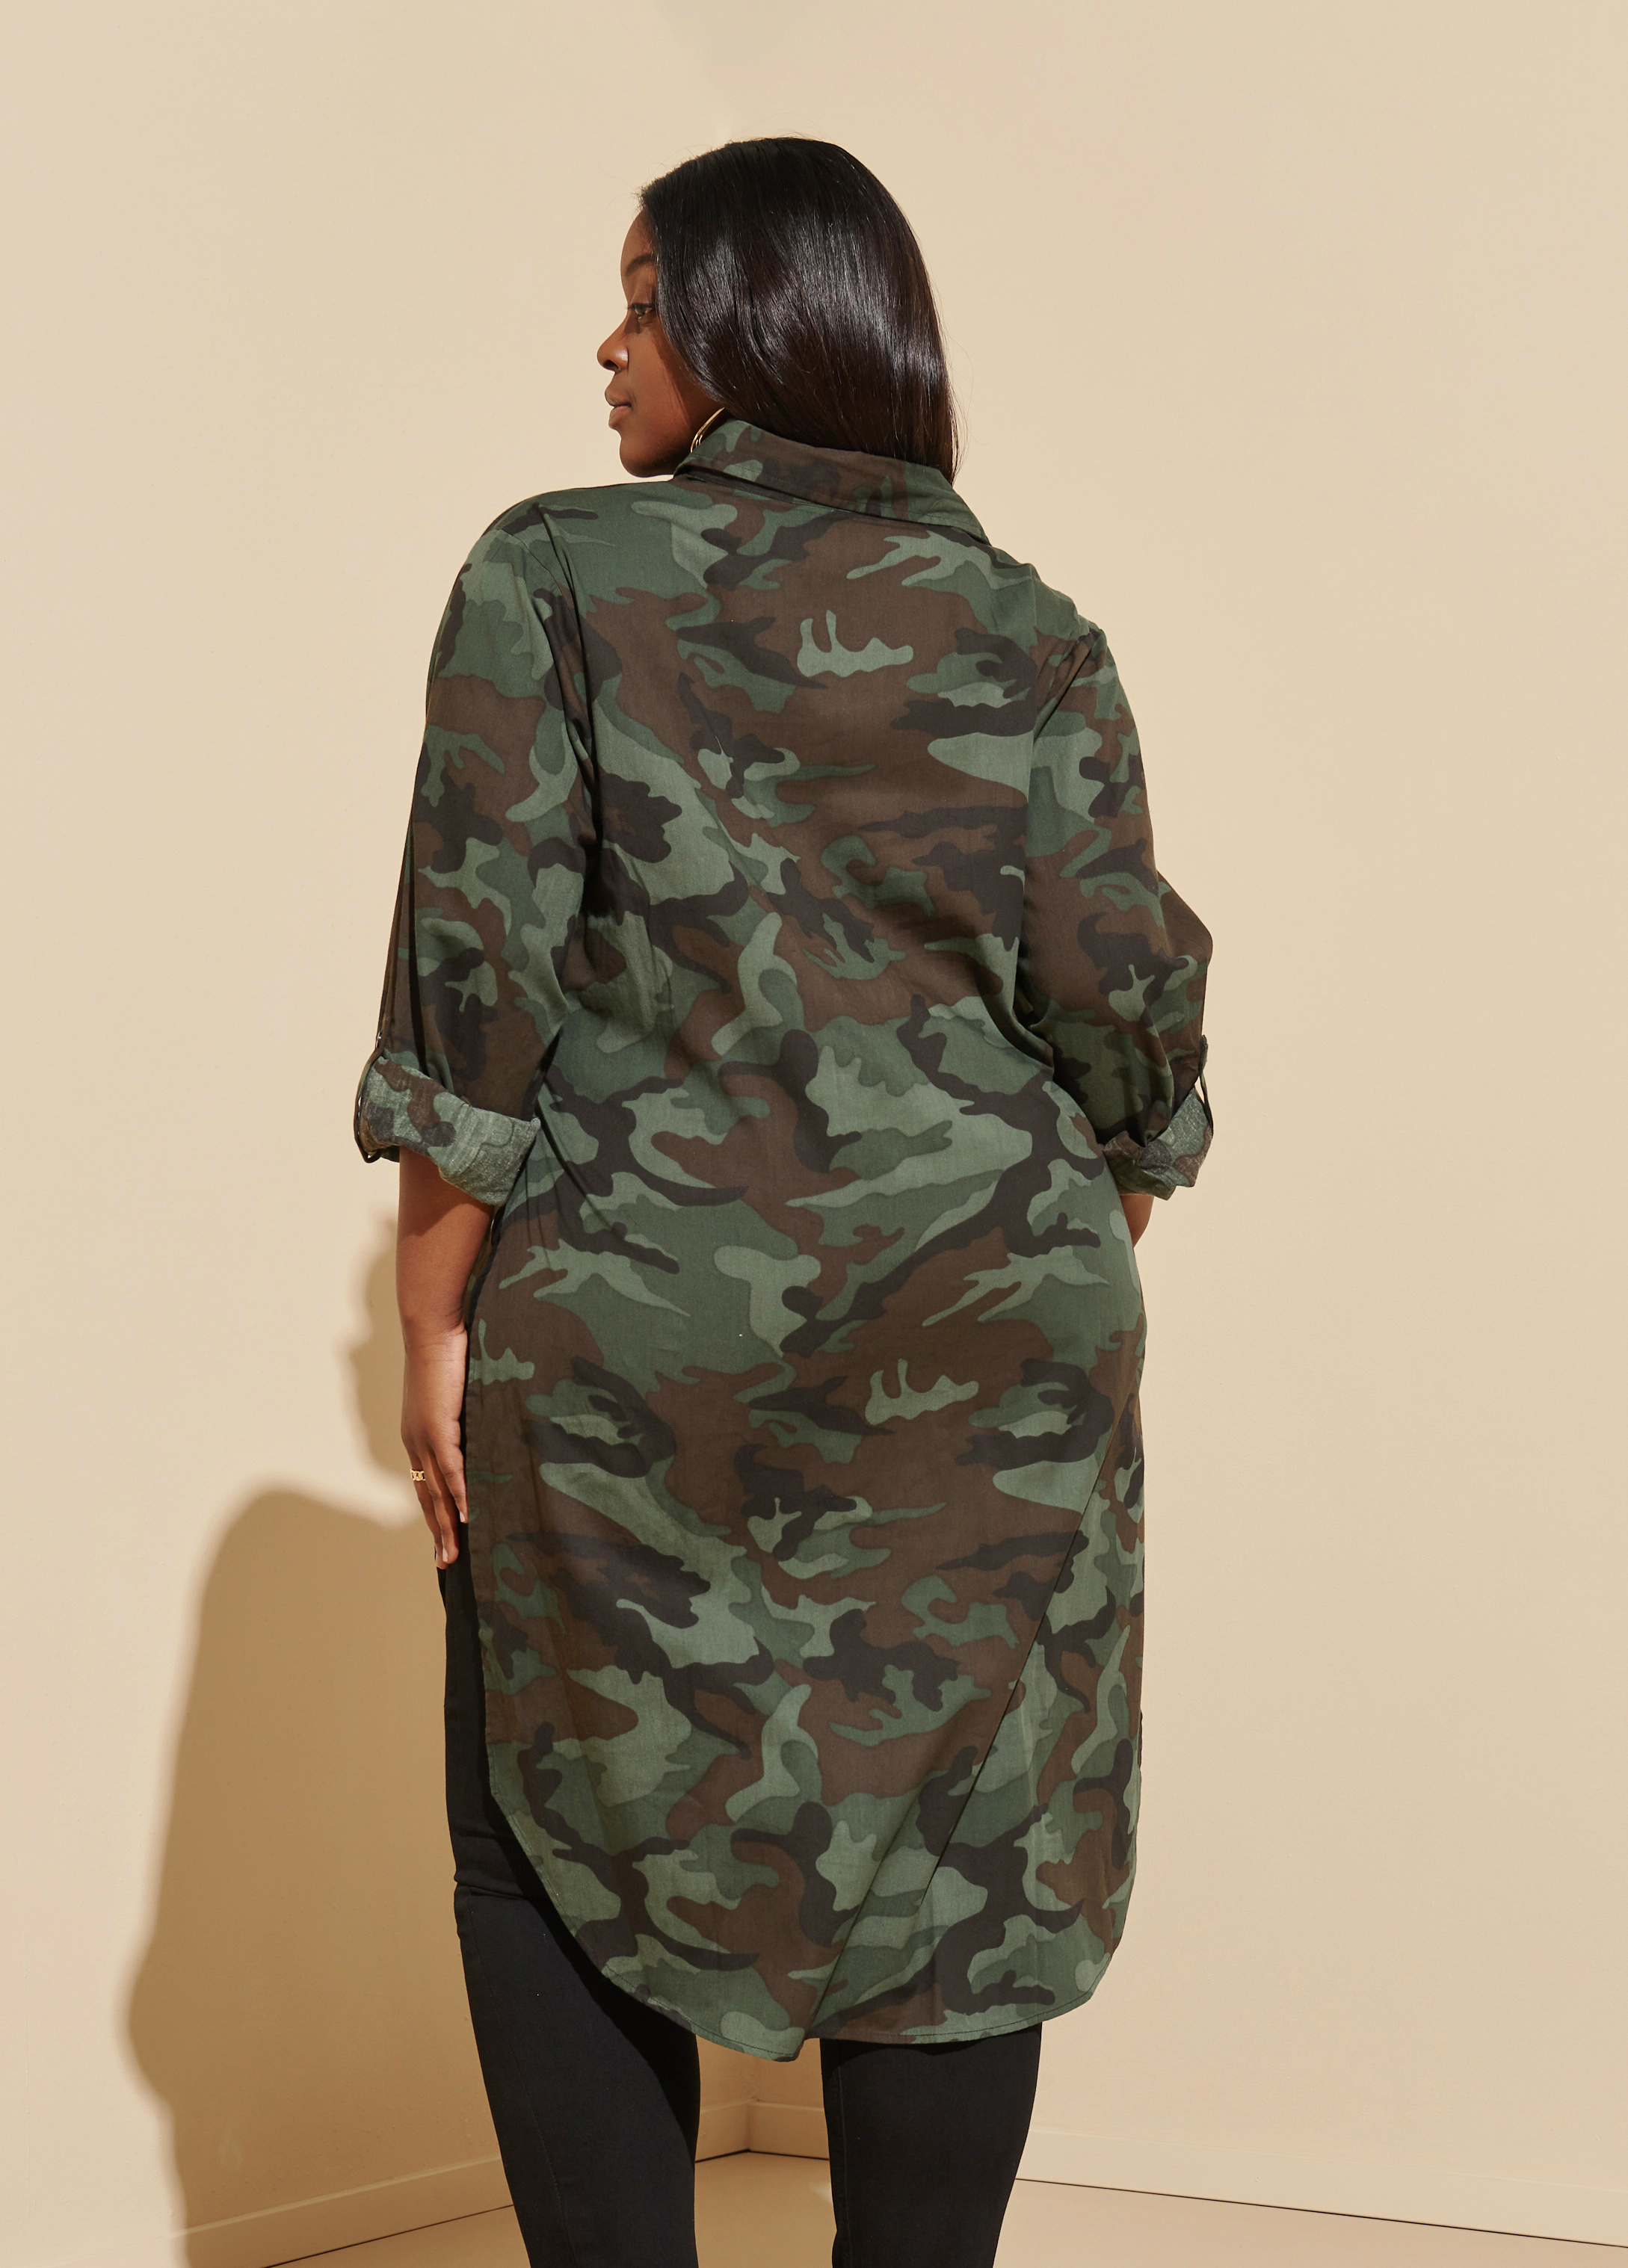 Plus Size Women's Camouflage Trend ǀ Ashley Stewart